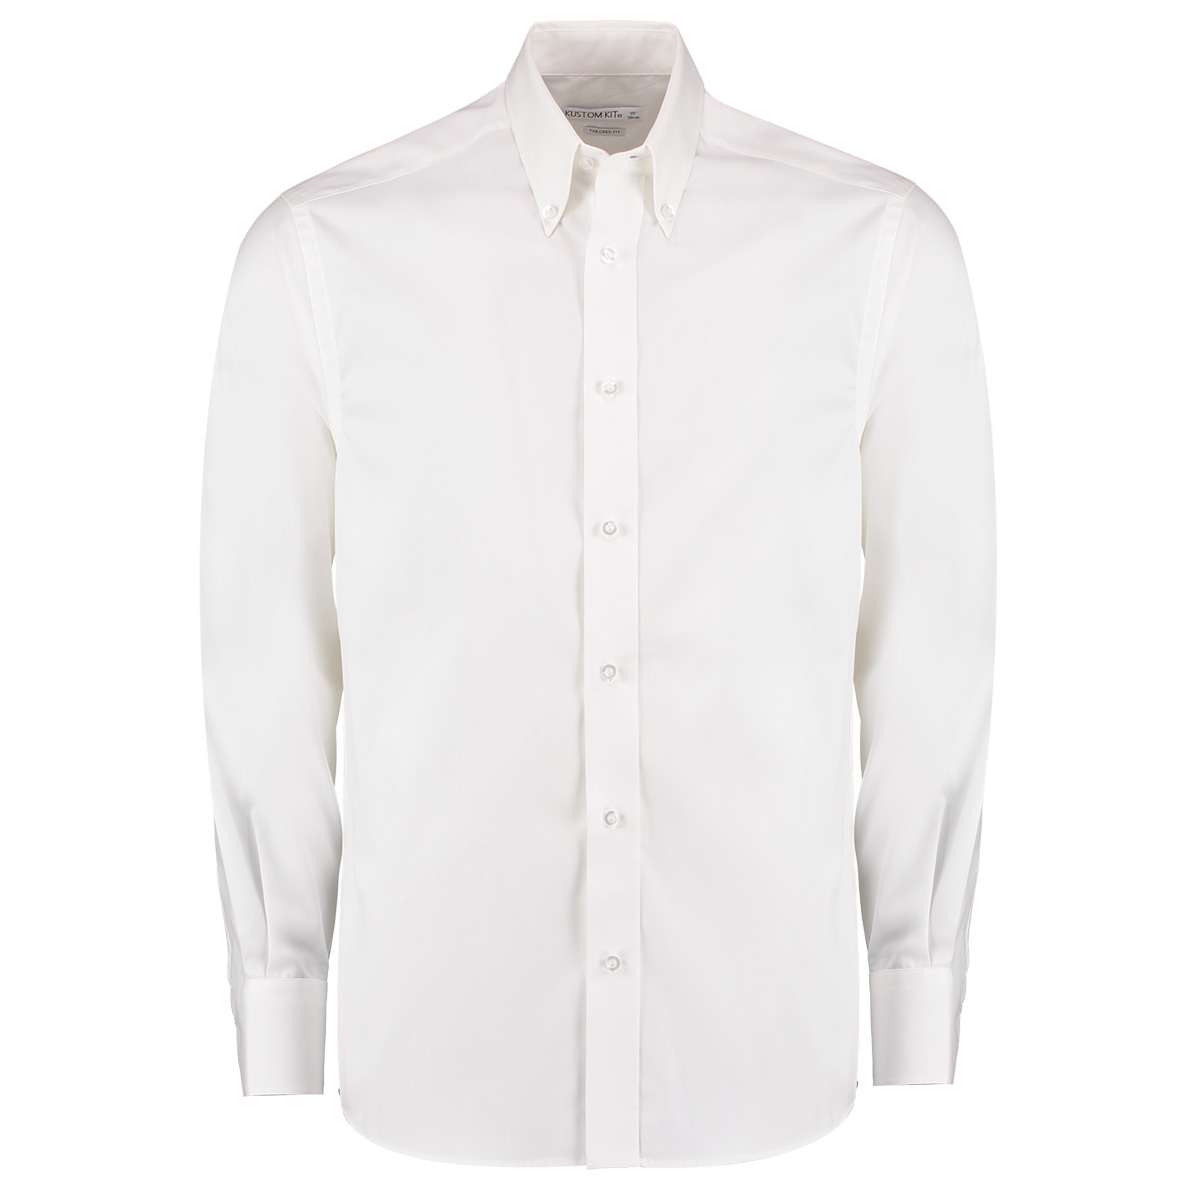 KK188 Tailored Fit Premium Oxford Shirt - Kustom Kit